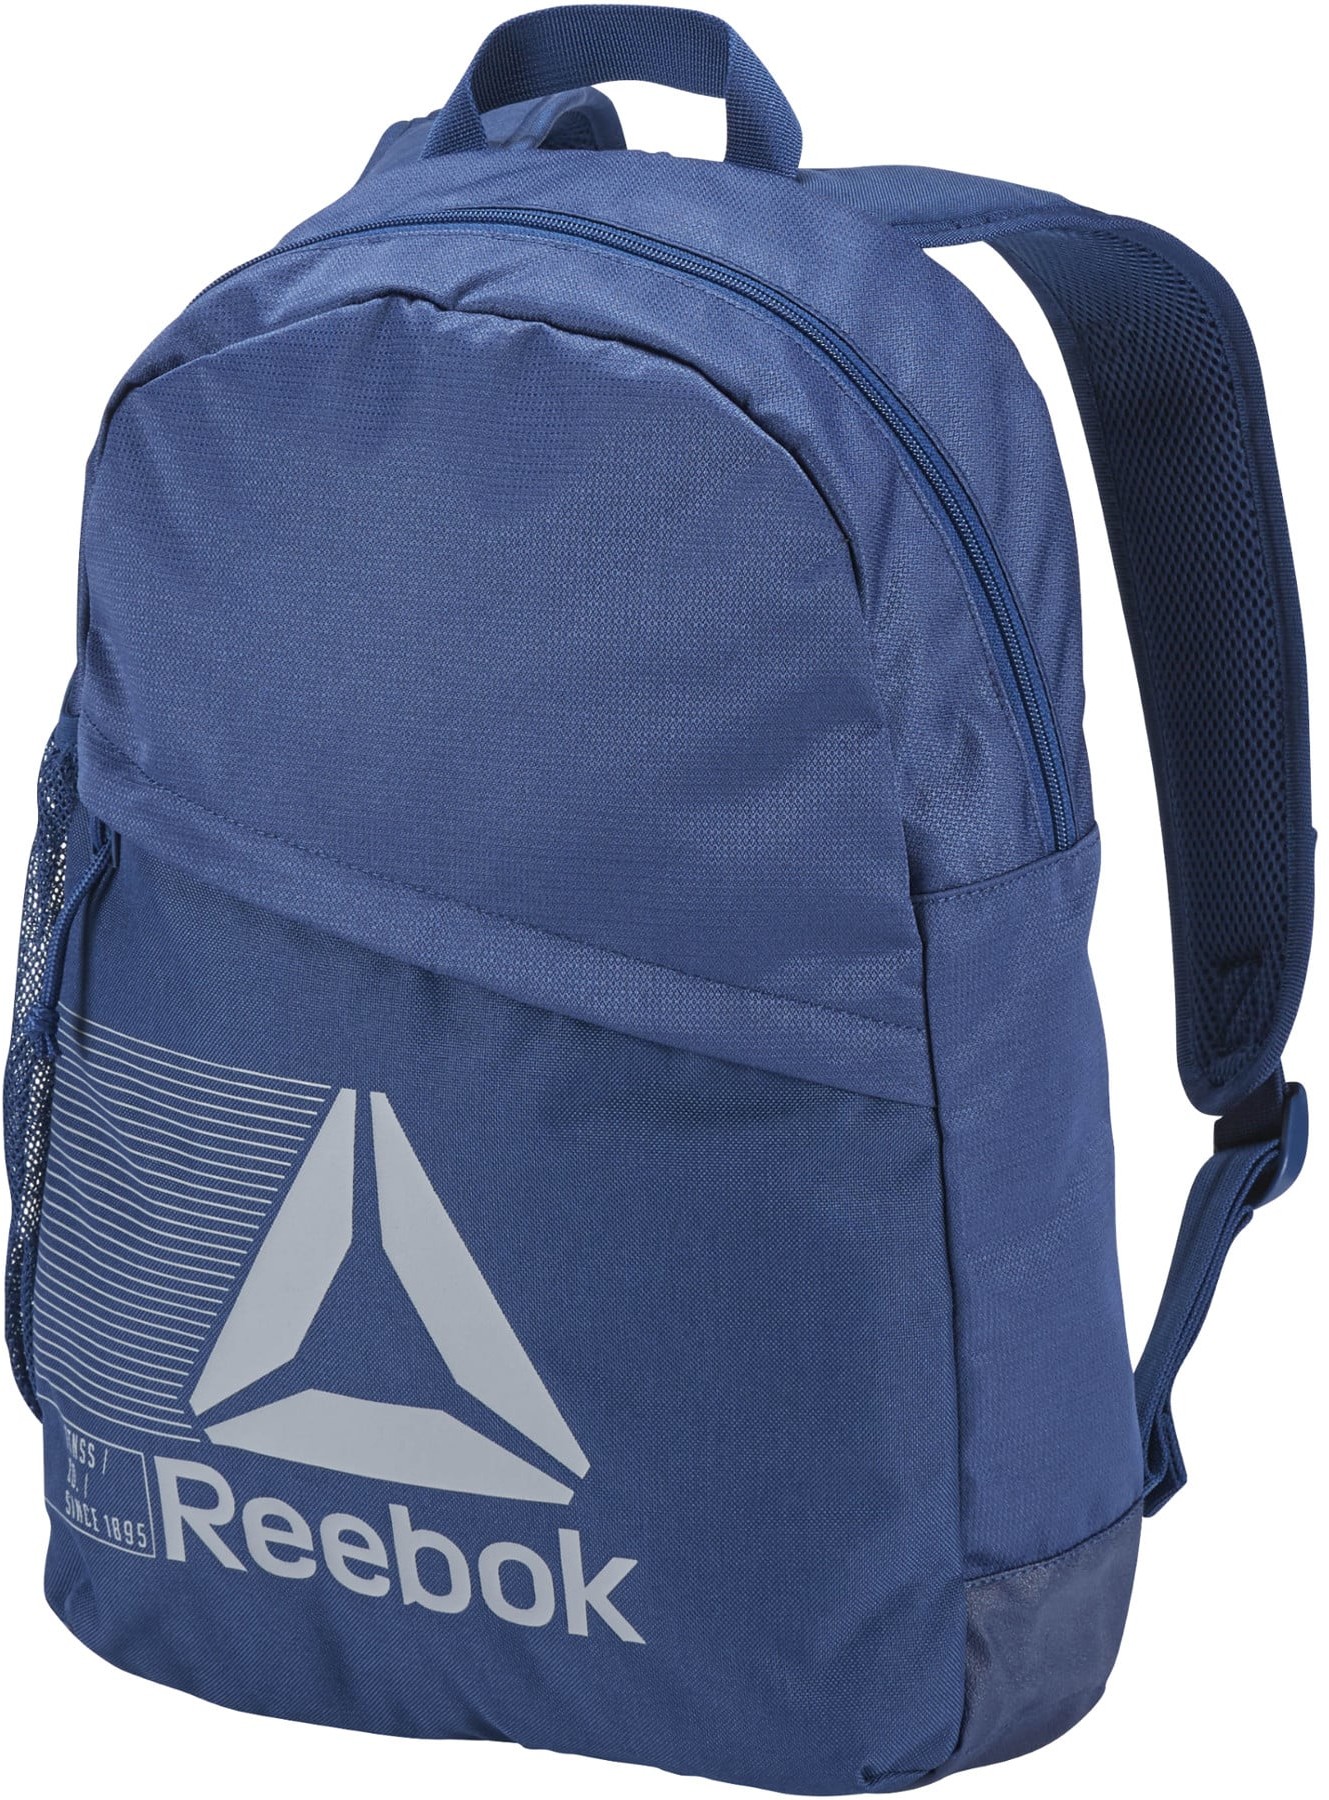 Reebok Plecak Grab And Go CV3384